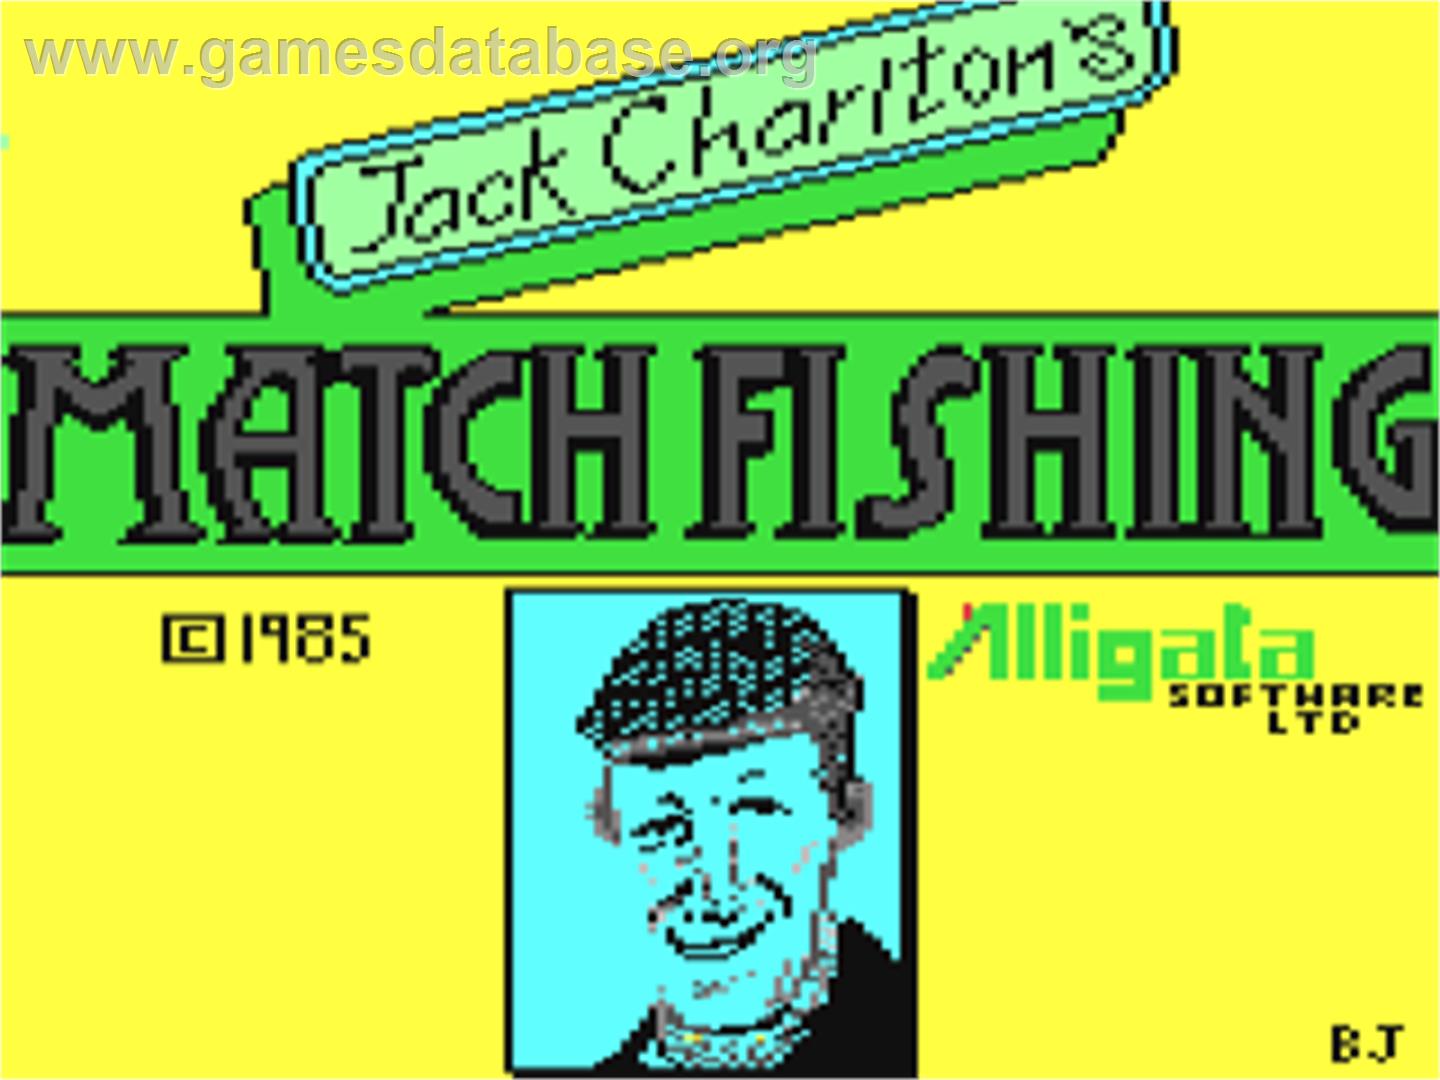 Jack Charlton's Match Fishing - Commodore 64 - Artwork - Title Screen